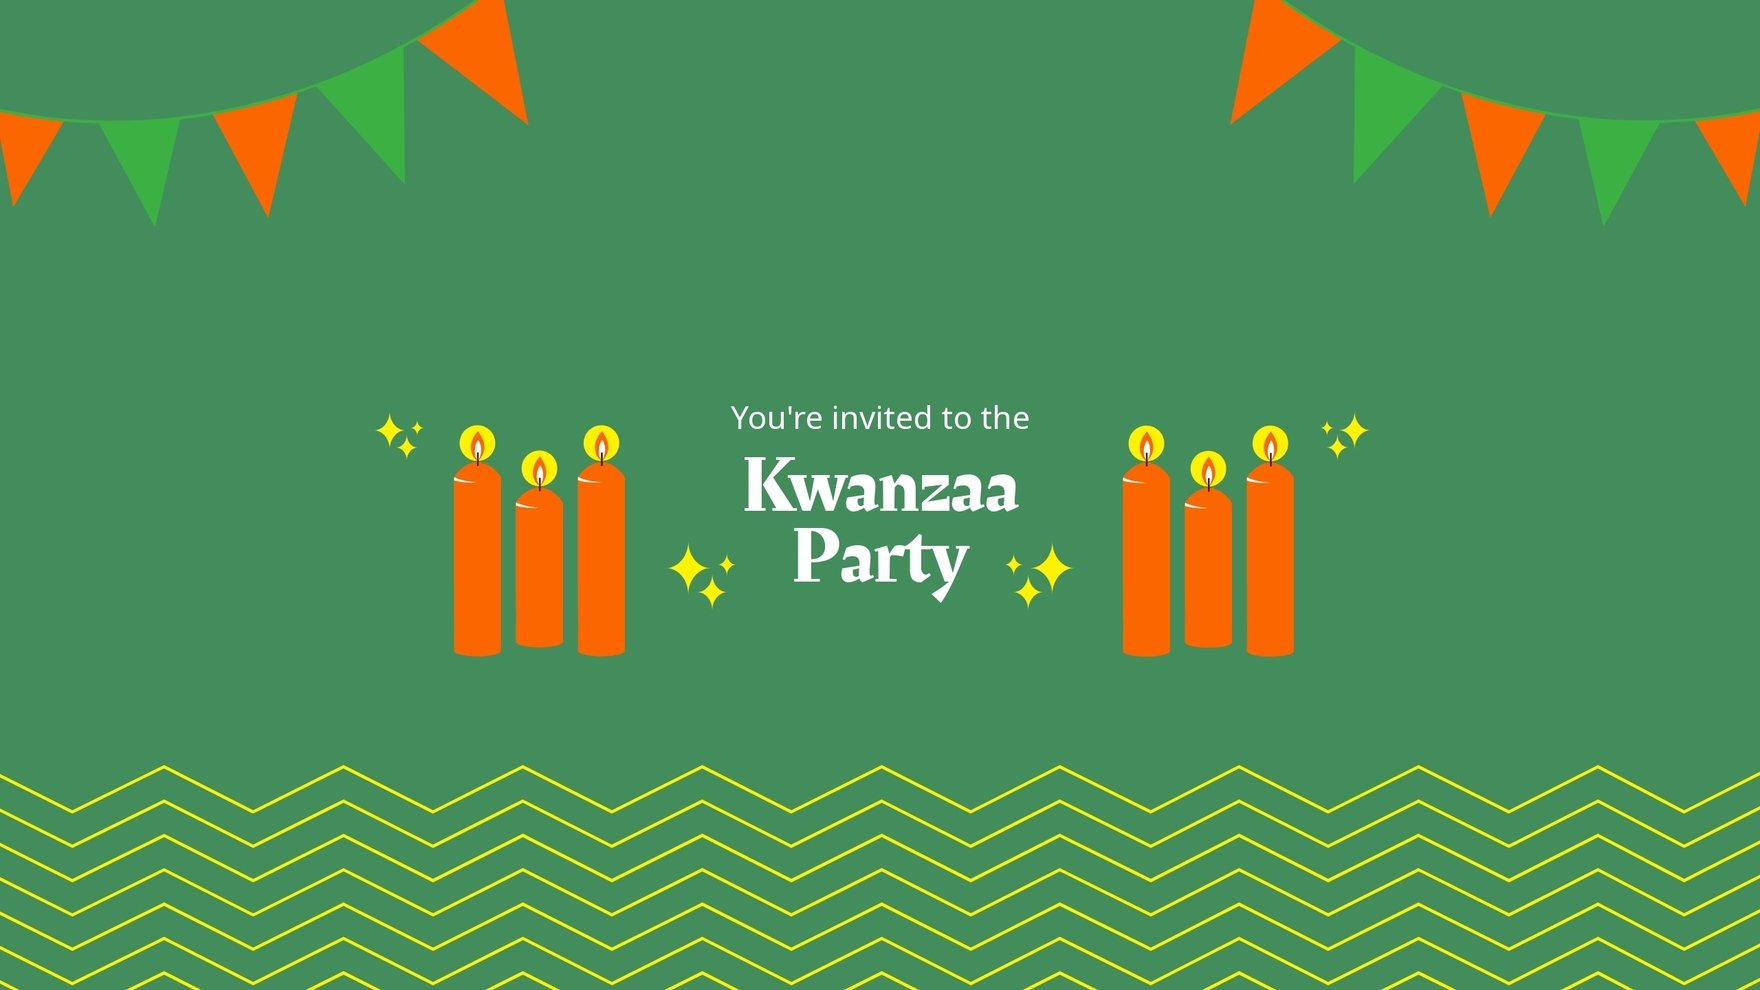 Kwanzaa Party Youtube Banner